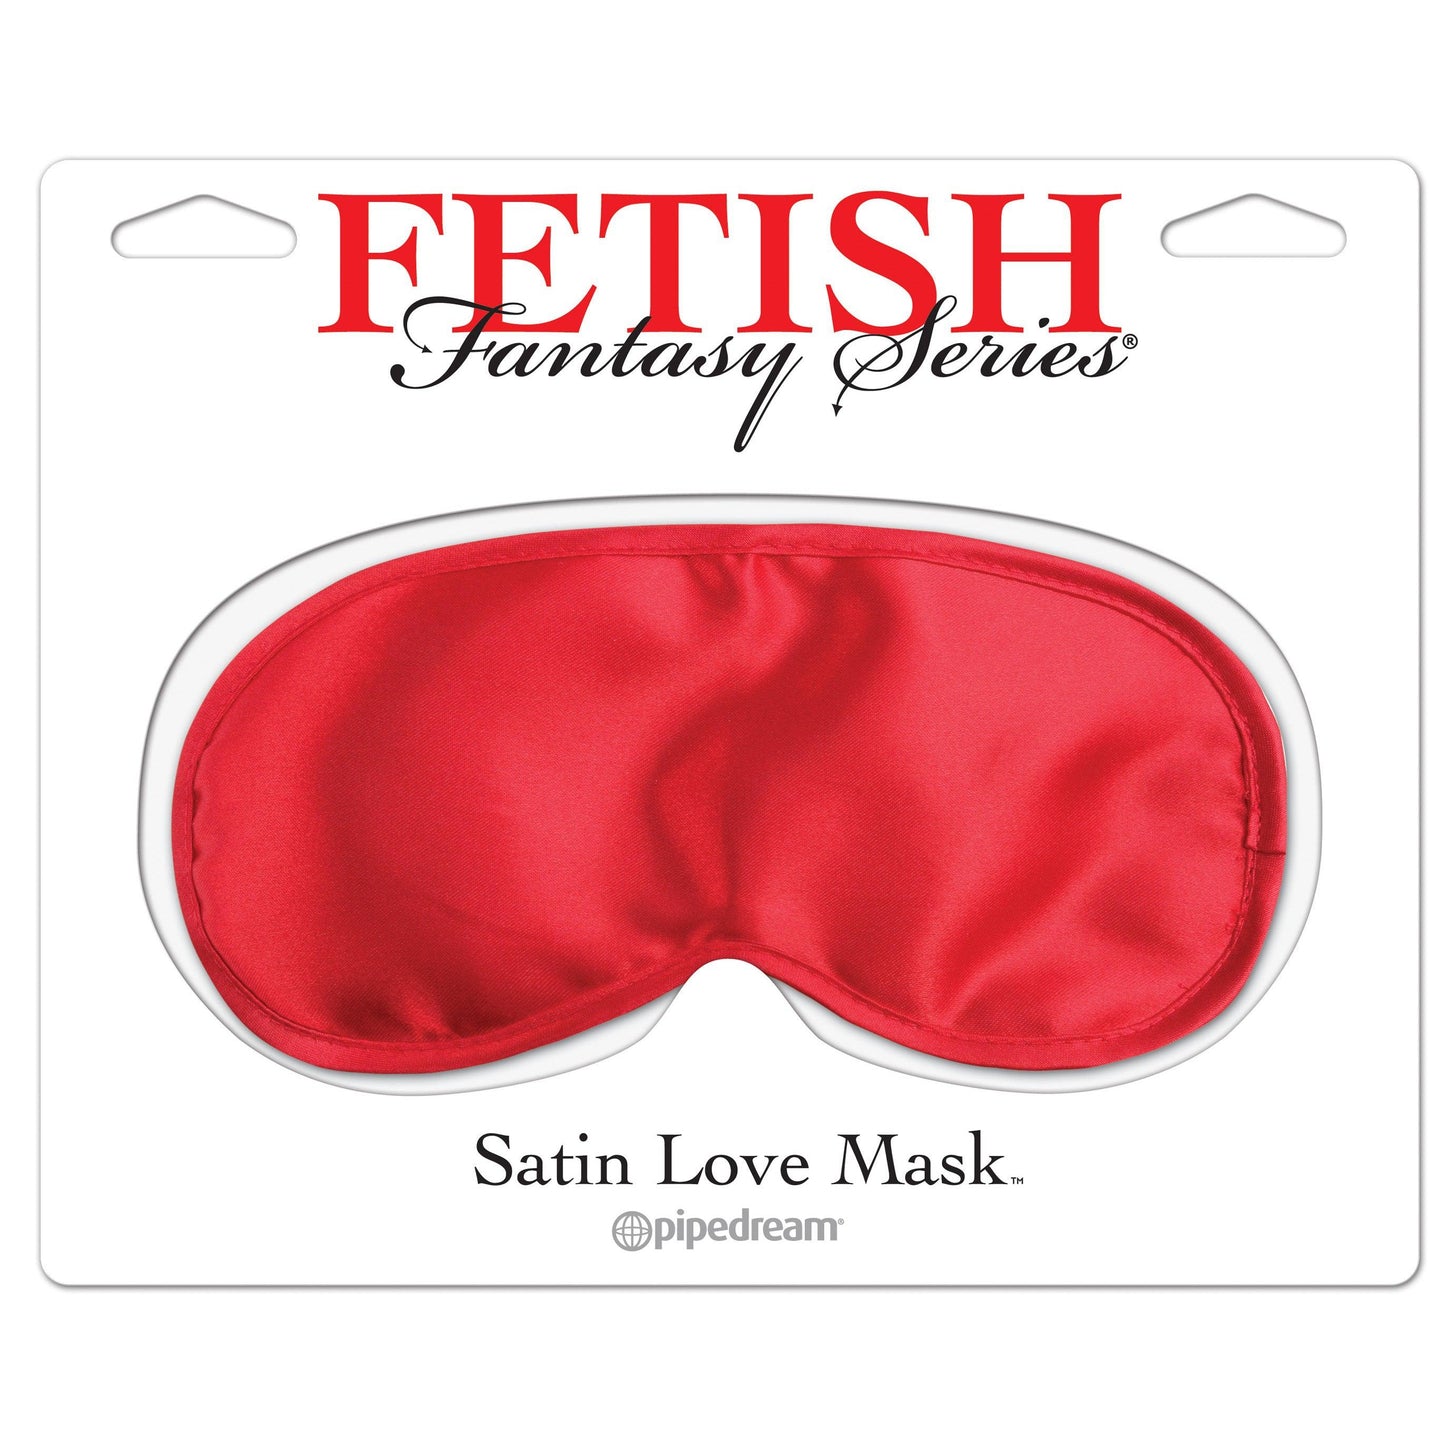 Fetish Fantasy Series Satin Love Mask - Red